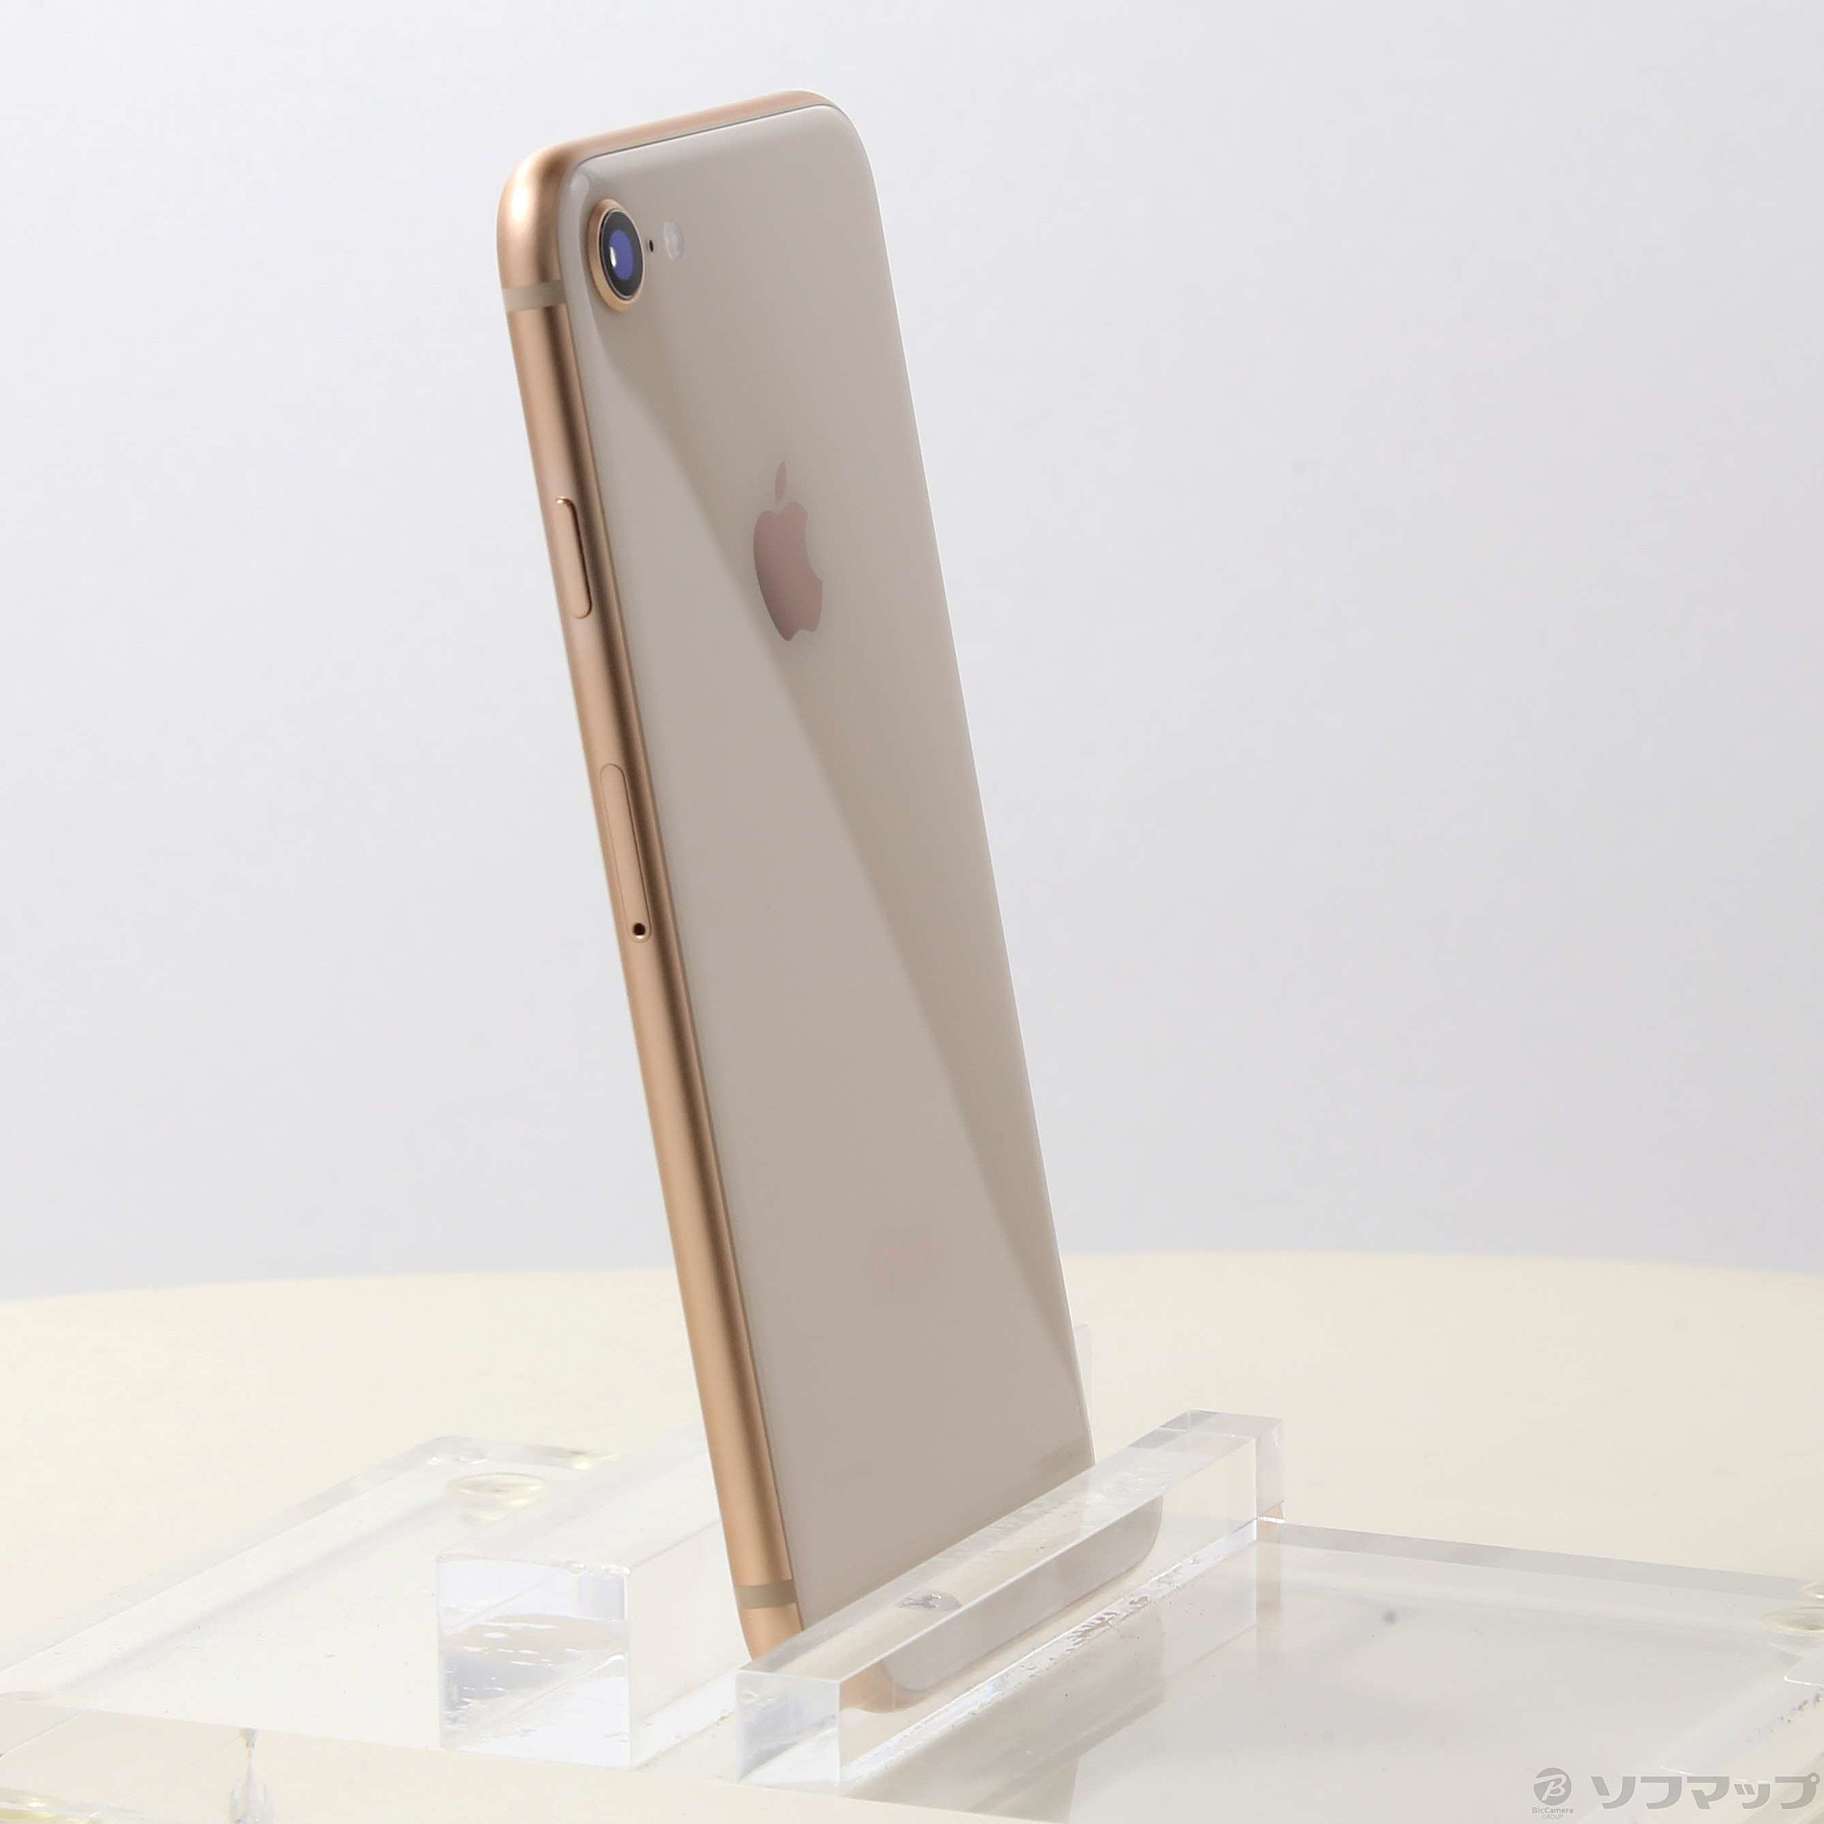 iPhone 8 Gold 256 GB MQ862J/A SIMフリー-